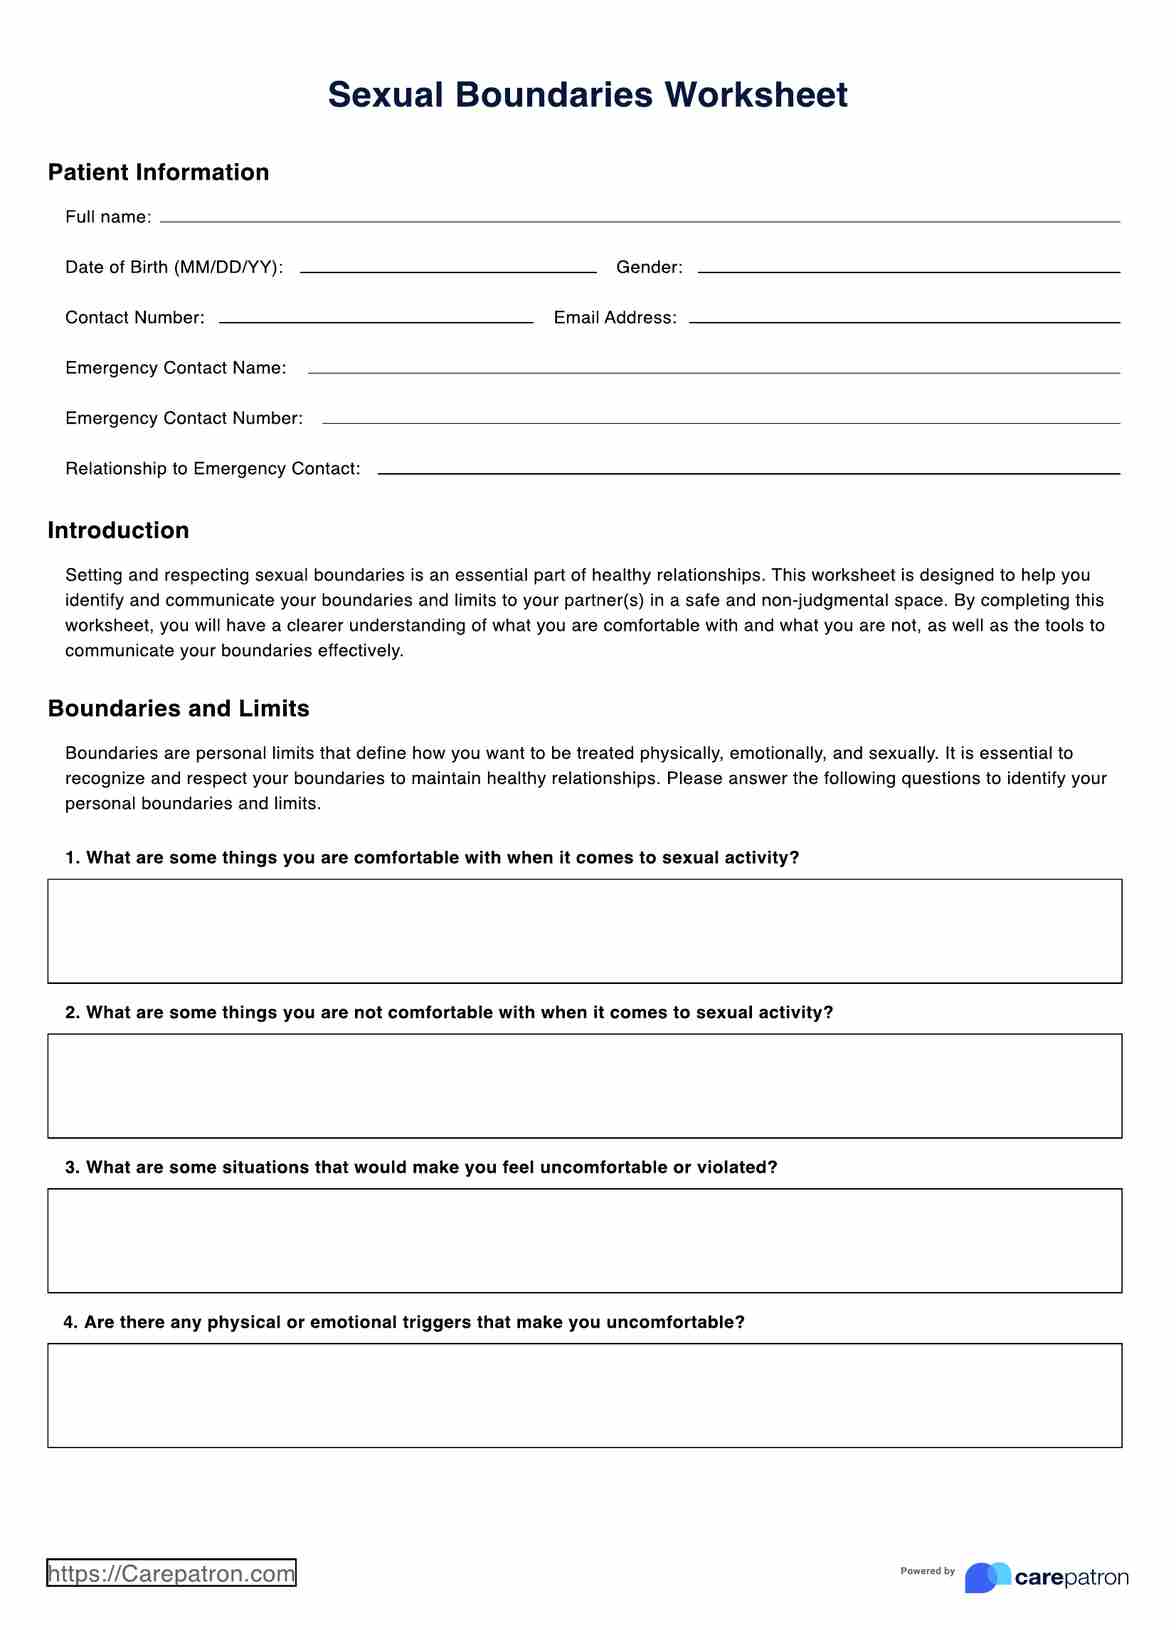 Sexual Boundaries Worksheets PDF Example